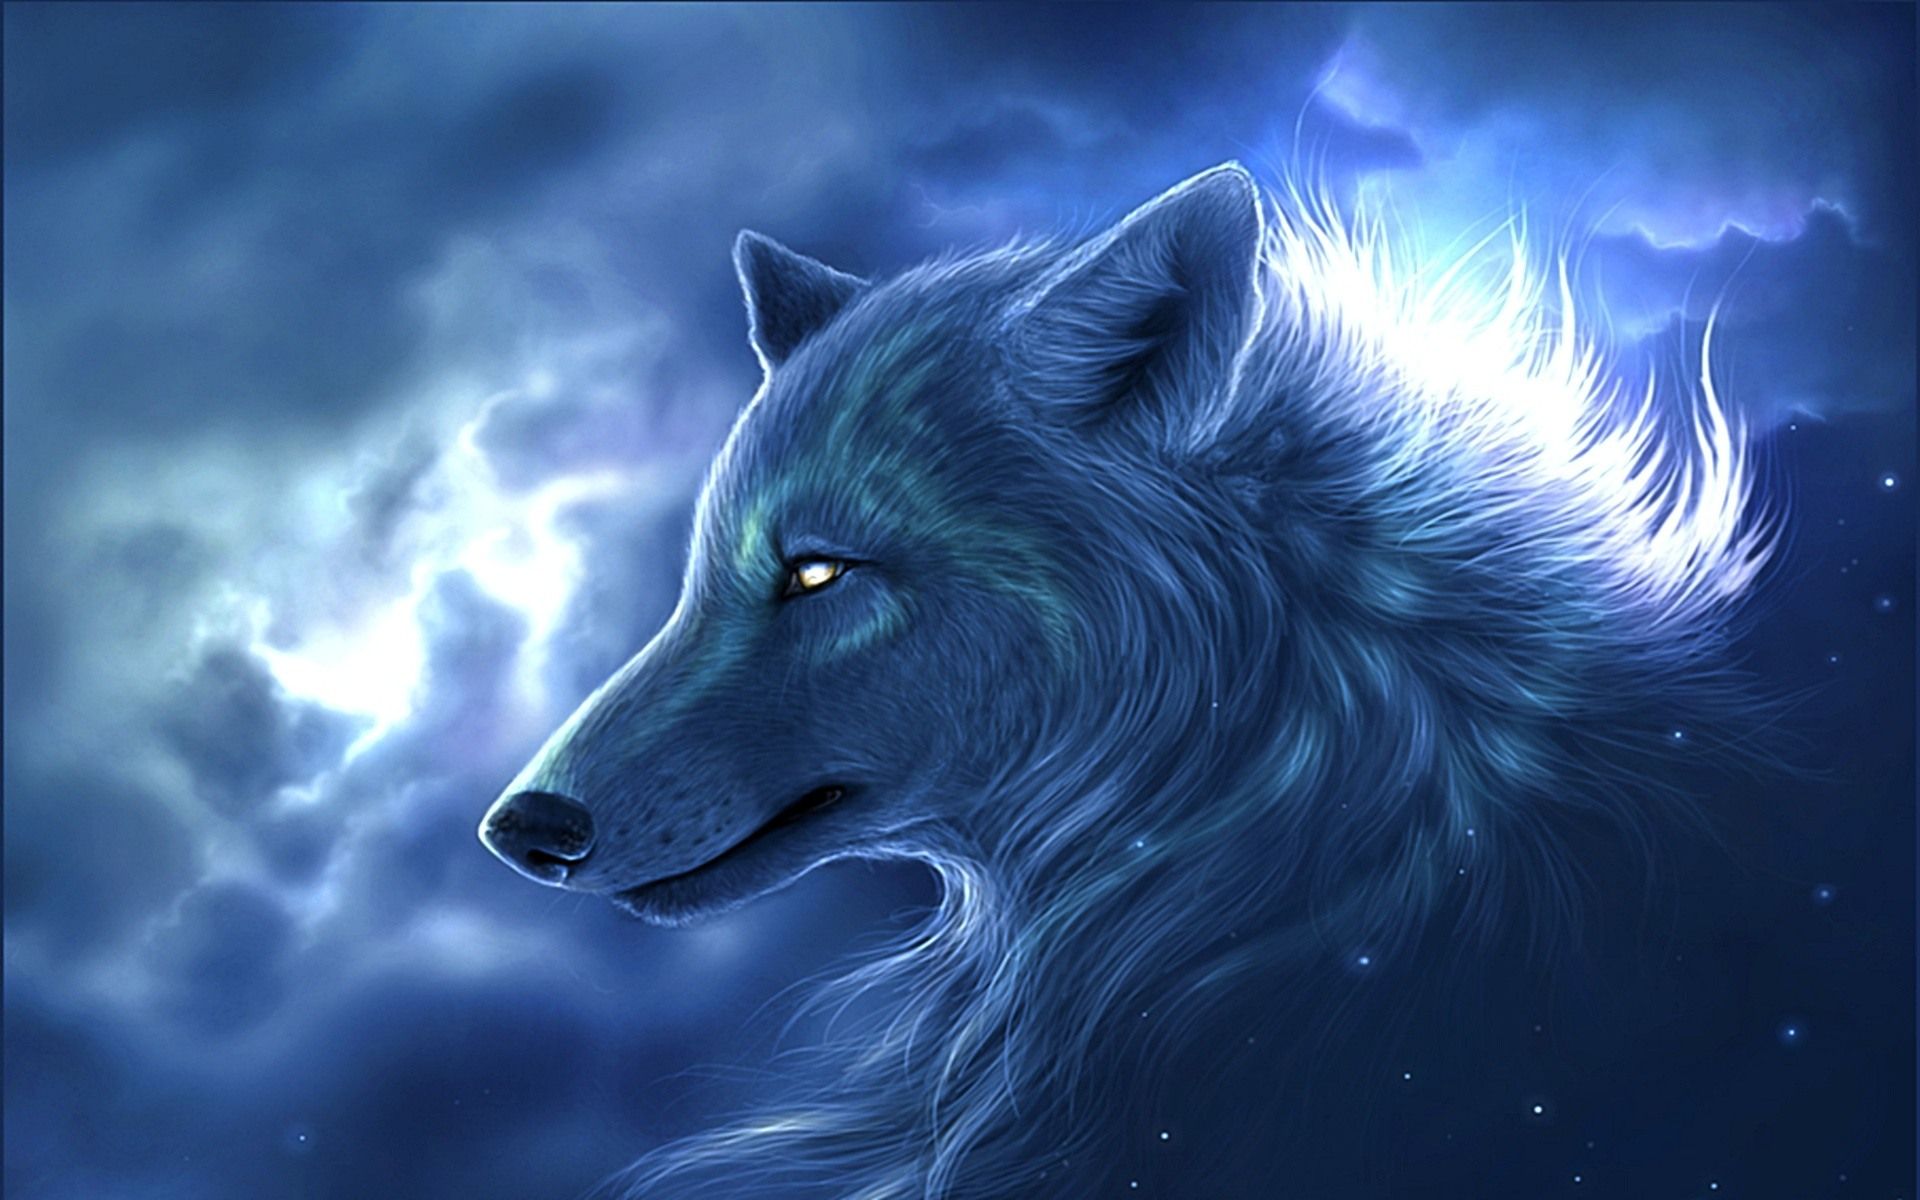 Spirit wolf wallpaper hd galagif.com